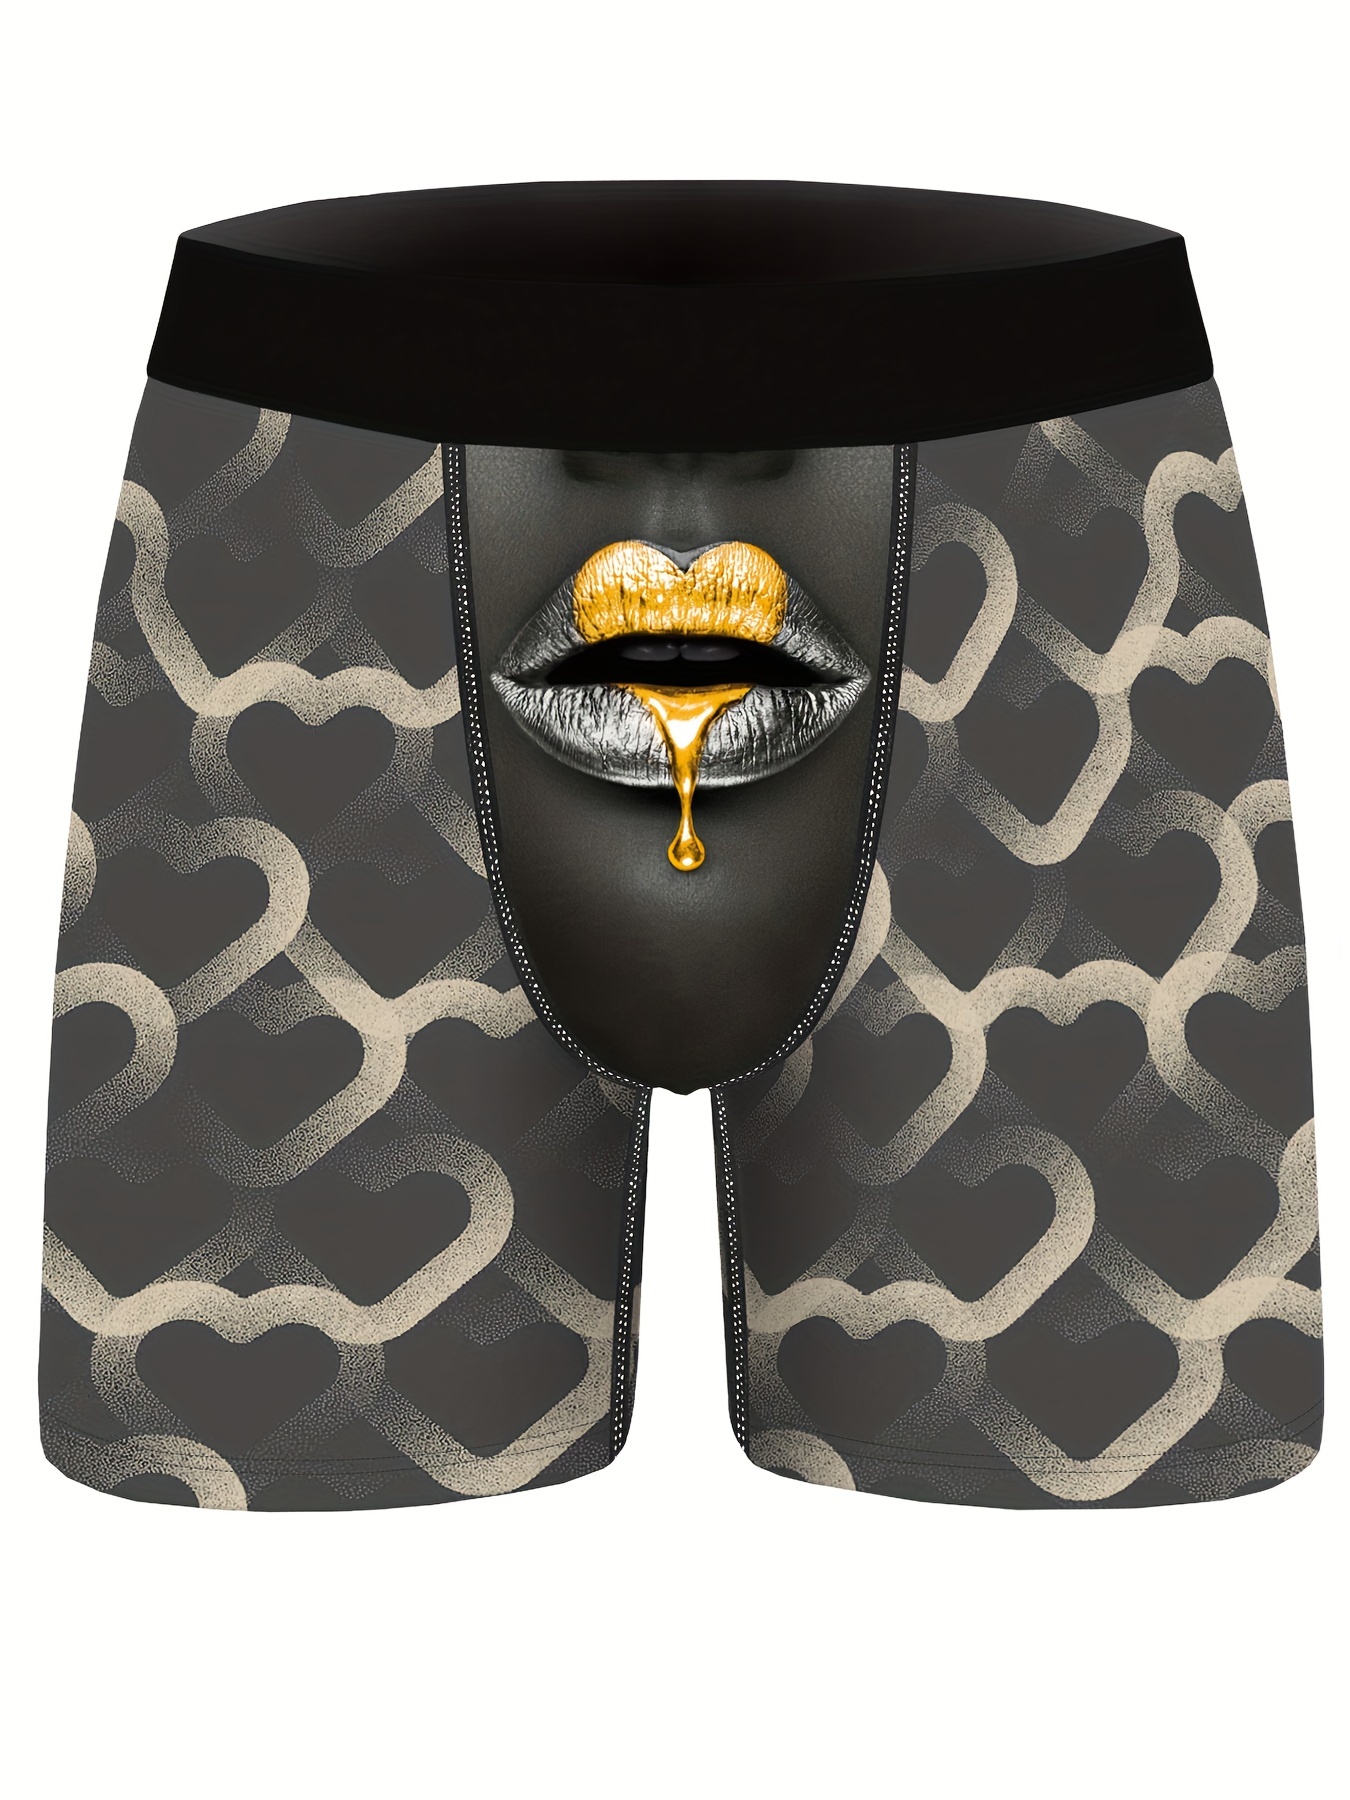 Stylish Lips/Heart Printed Satin Boxers Shorts for Men